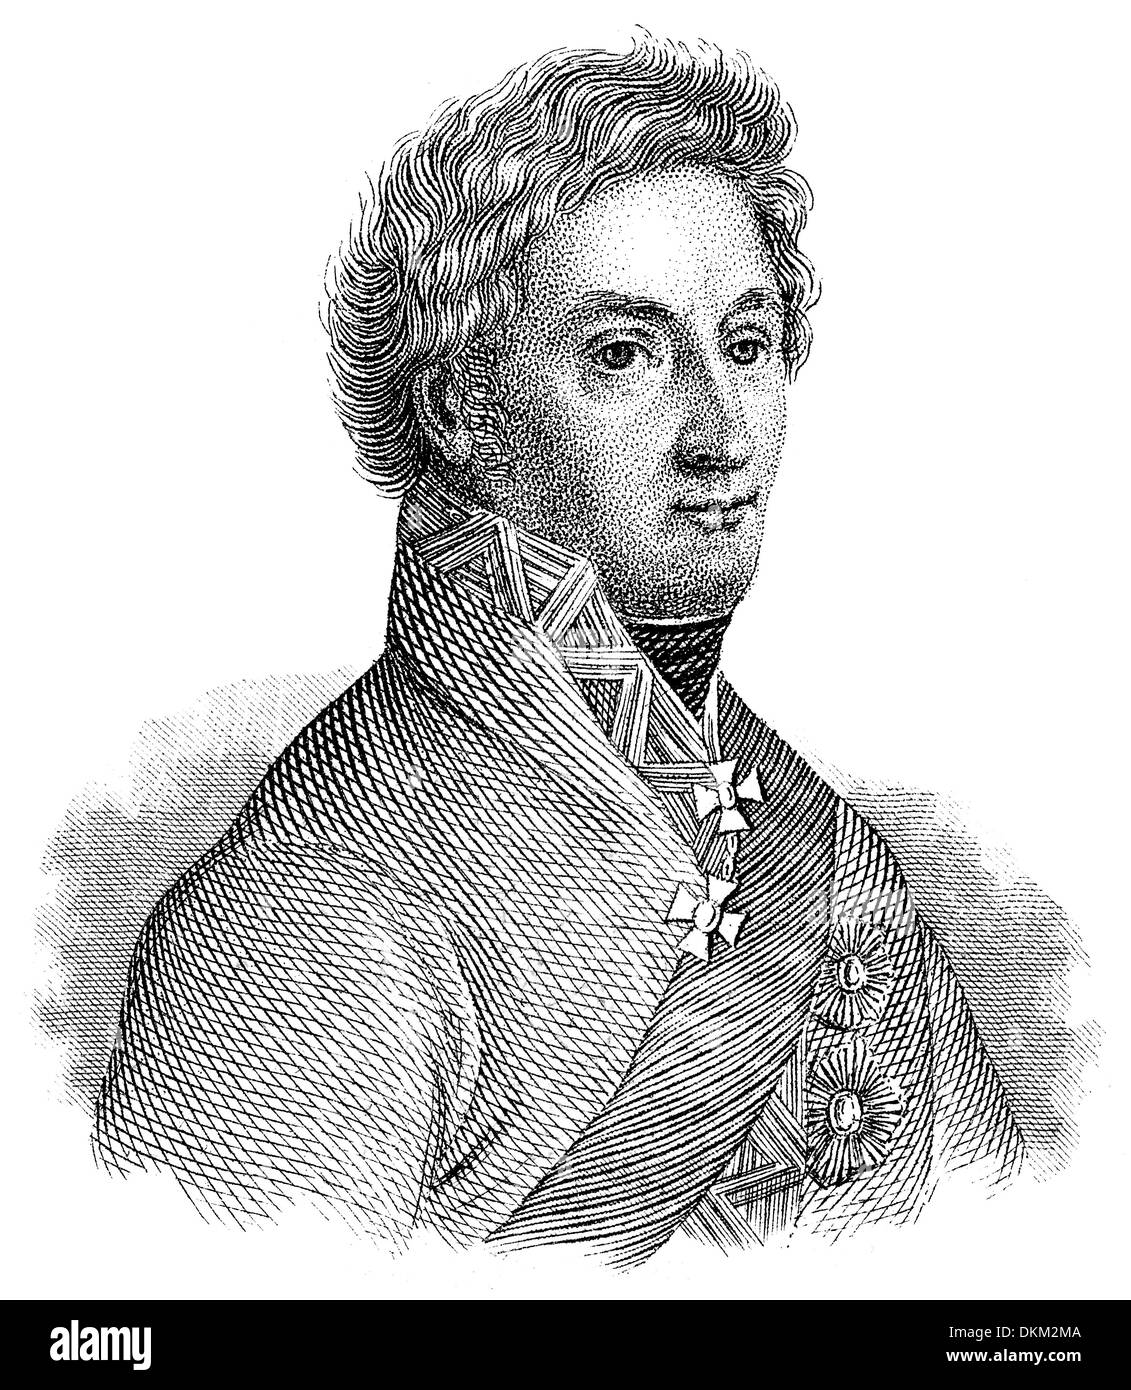 Portrait of Hieronymus Karl Graf von Colloredo-Mansfeld, 1775 - 1822, an Austrian corps commander during the Napoleonic Wars Stock Photo